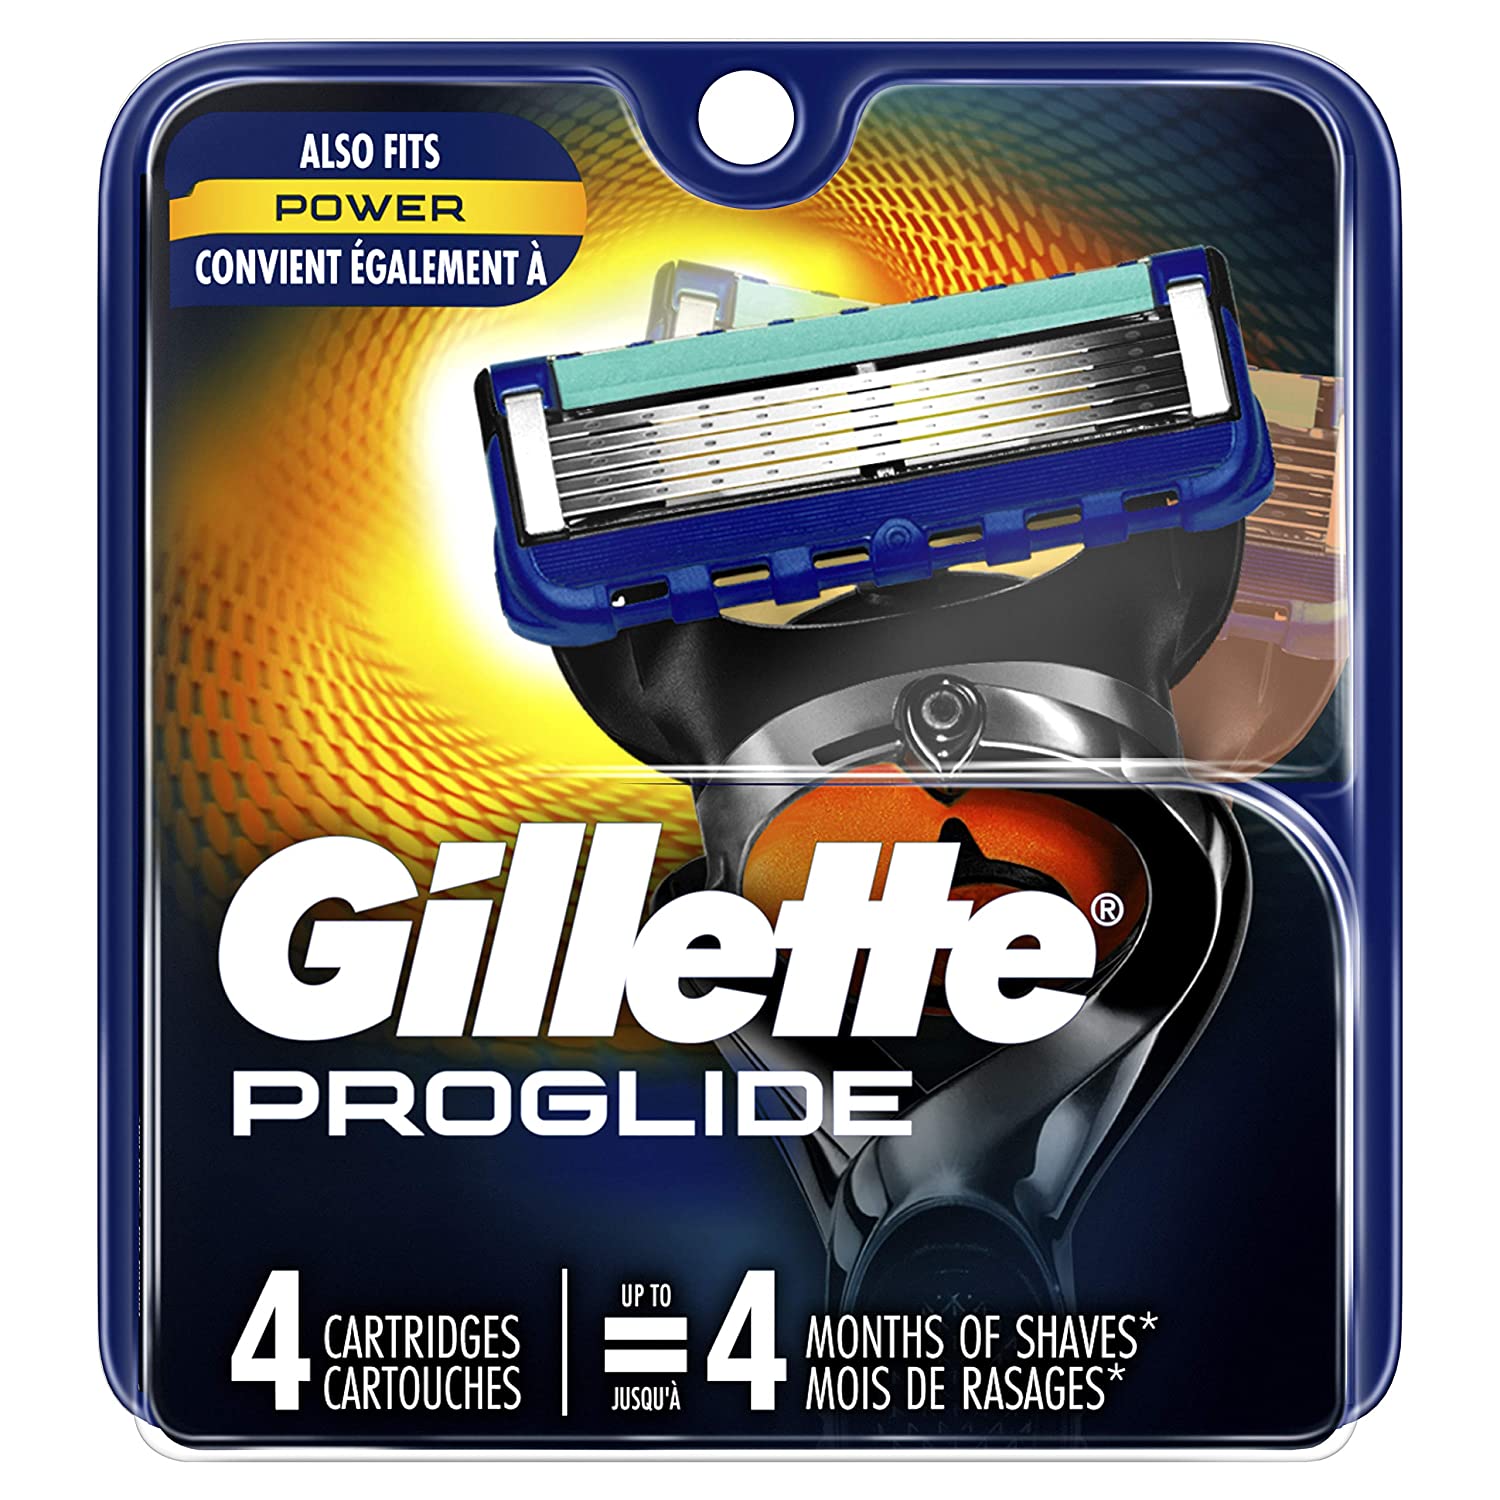 Gillette Fusion Proglide Flex Ball Manual Shaving Razor Blades At 999 On Amazon India Best E Offer